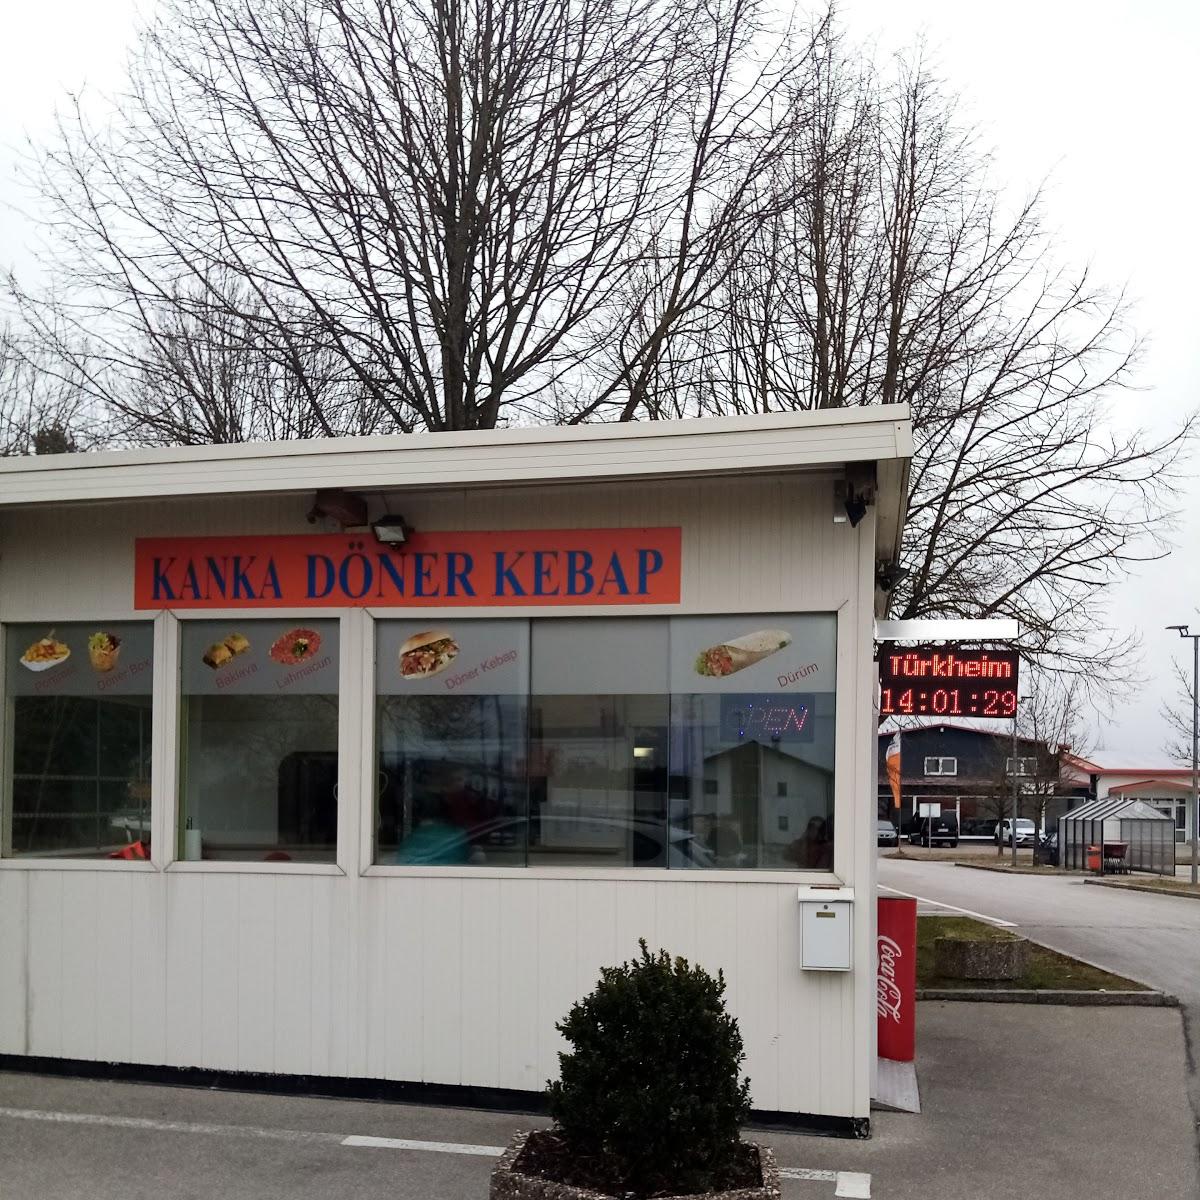 Restaurant "Kanka Kebab am V-Markt Türkheim" in Türkheim